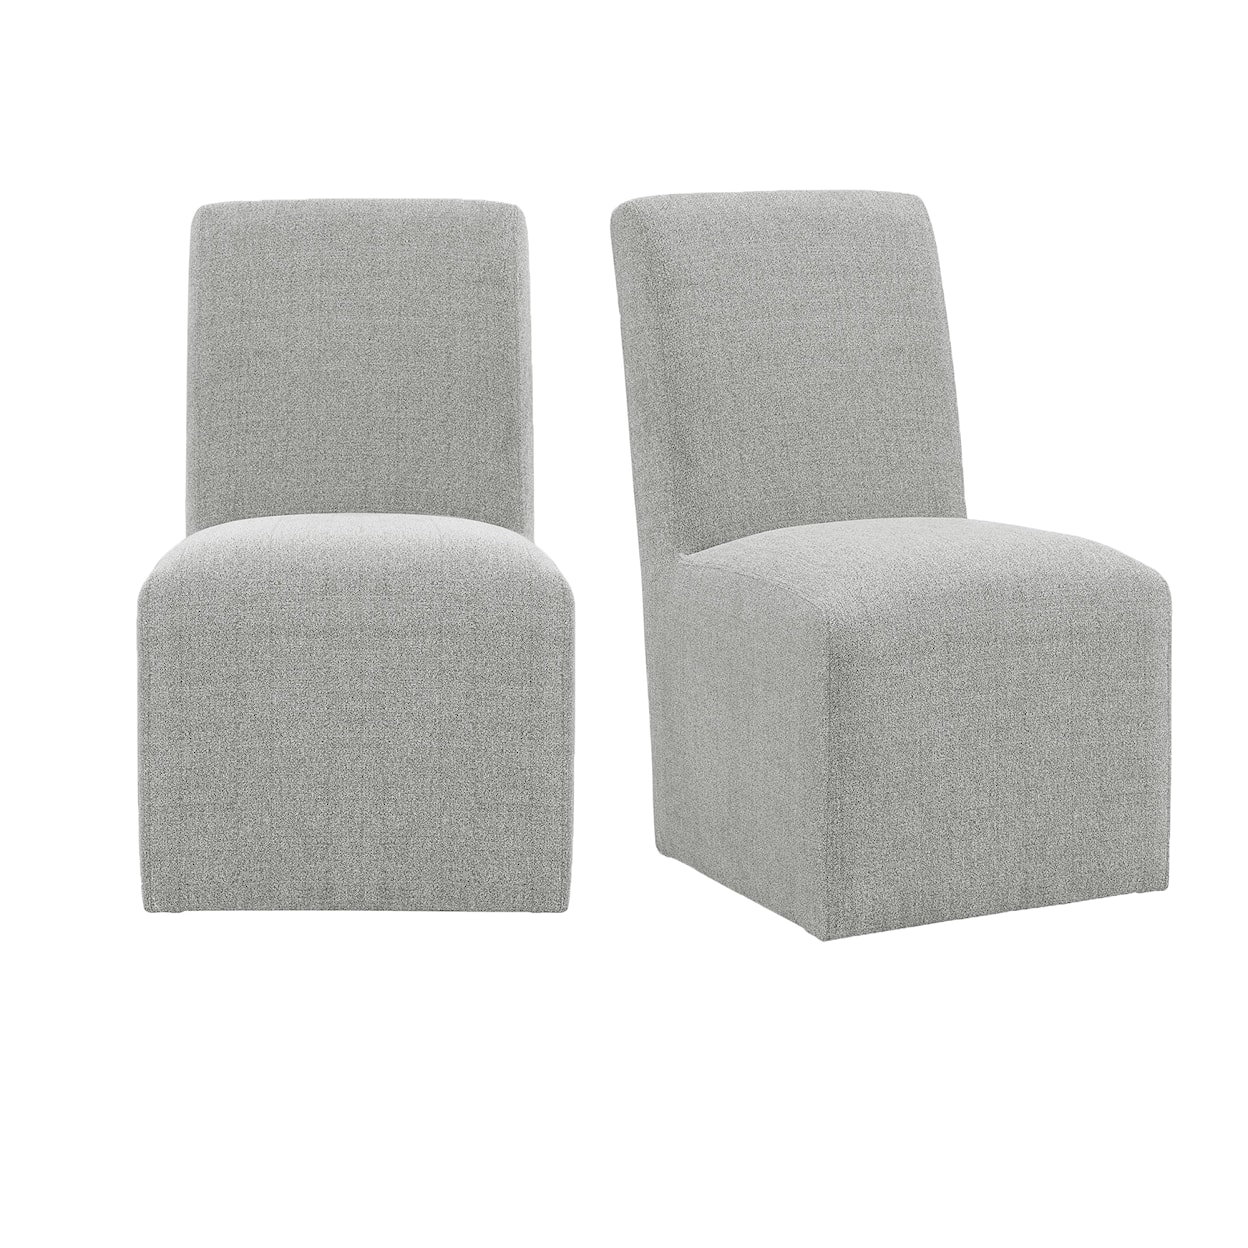 Elements International Nero Upholstered Side Chair Set